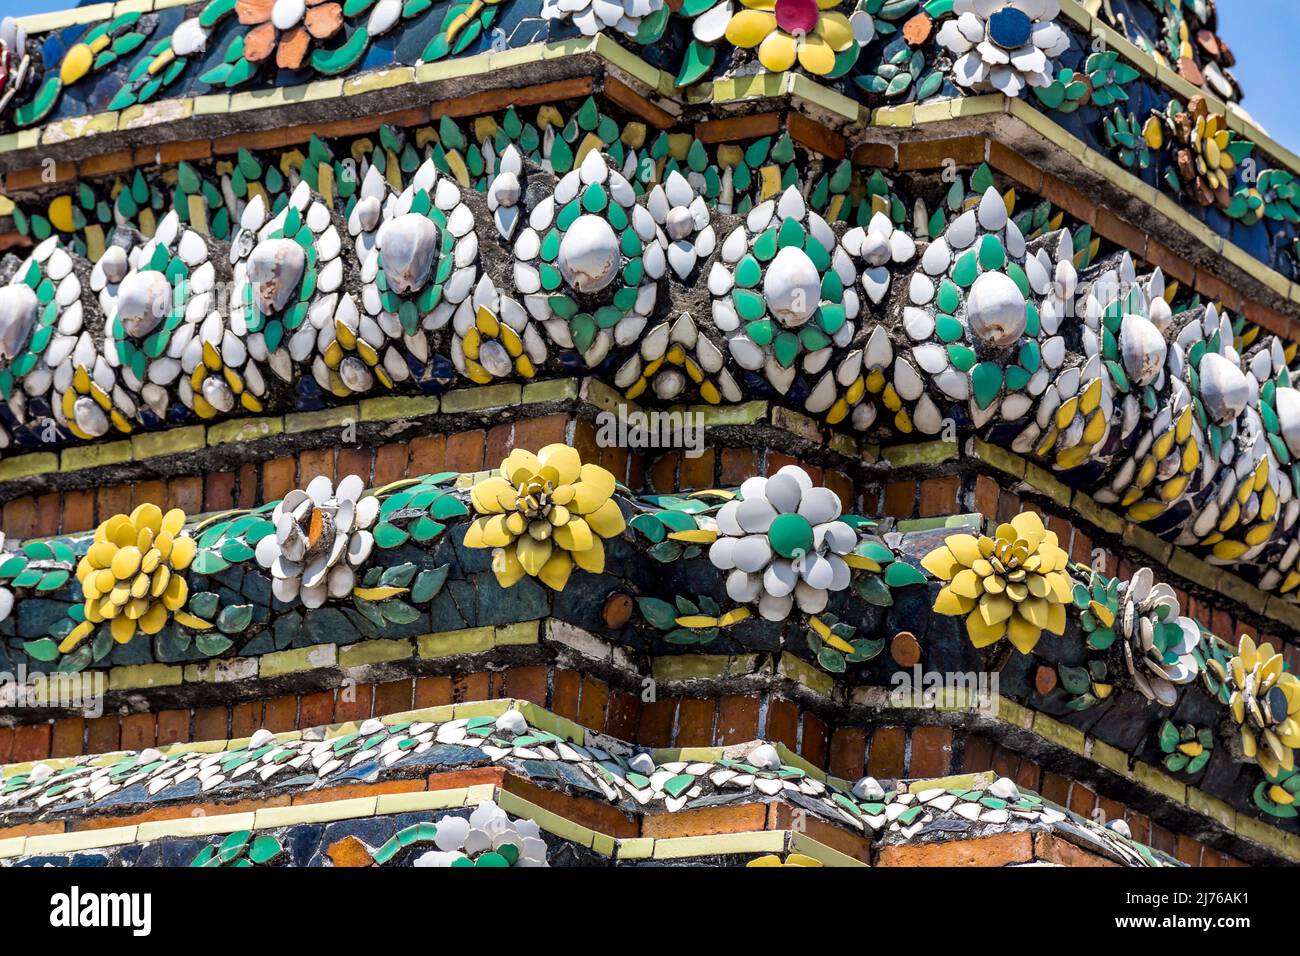 Mosaikdekorationen, Chedis, Tempelkomplex Wat Pho, Tempel des liegenden Buddha, Bangkok, Thailand, Asien Stockfoto